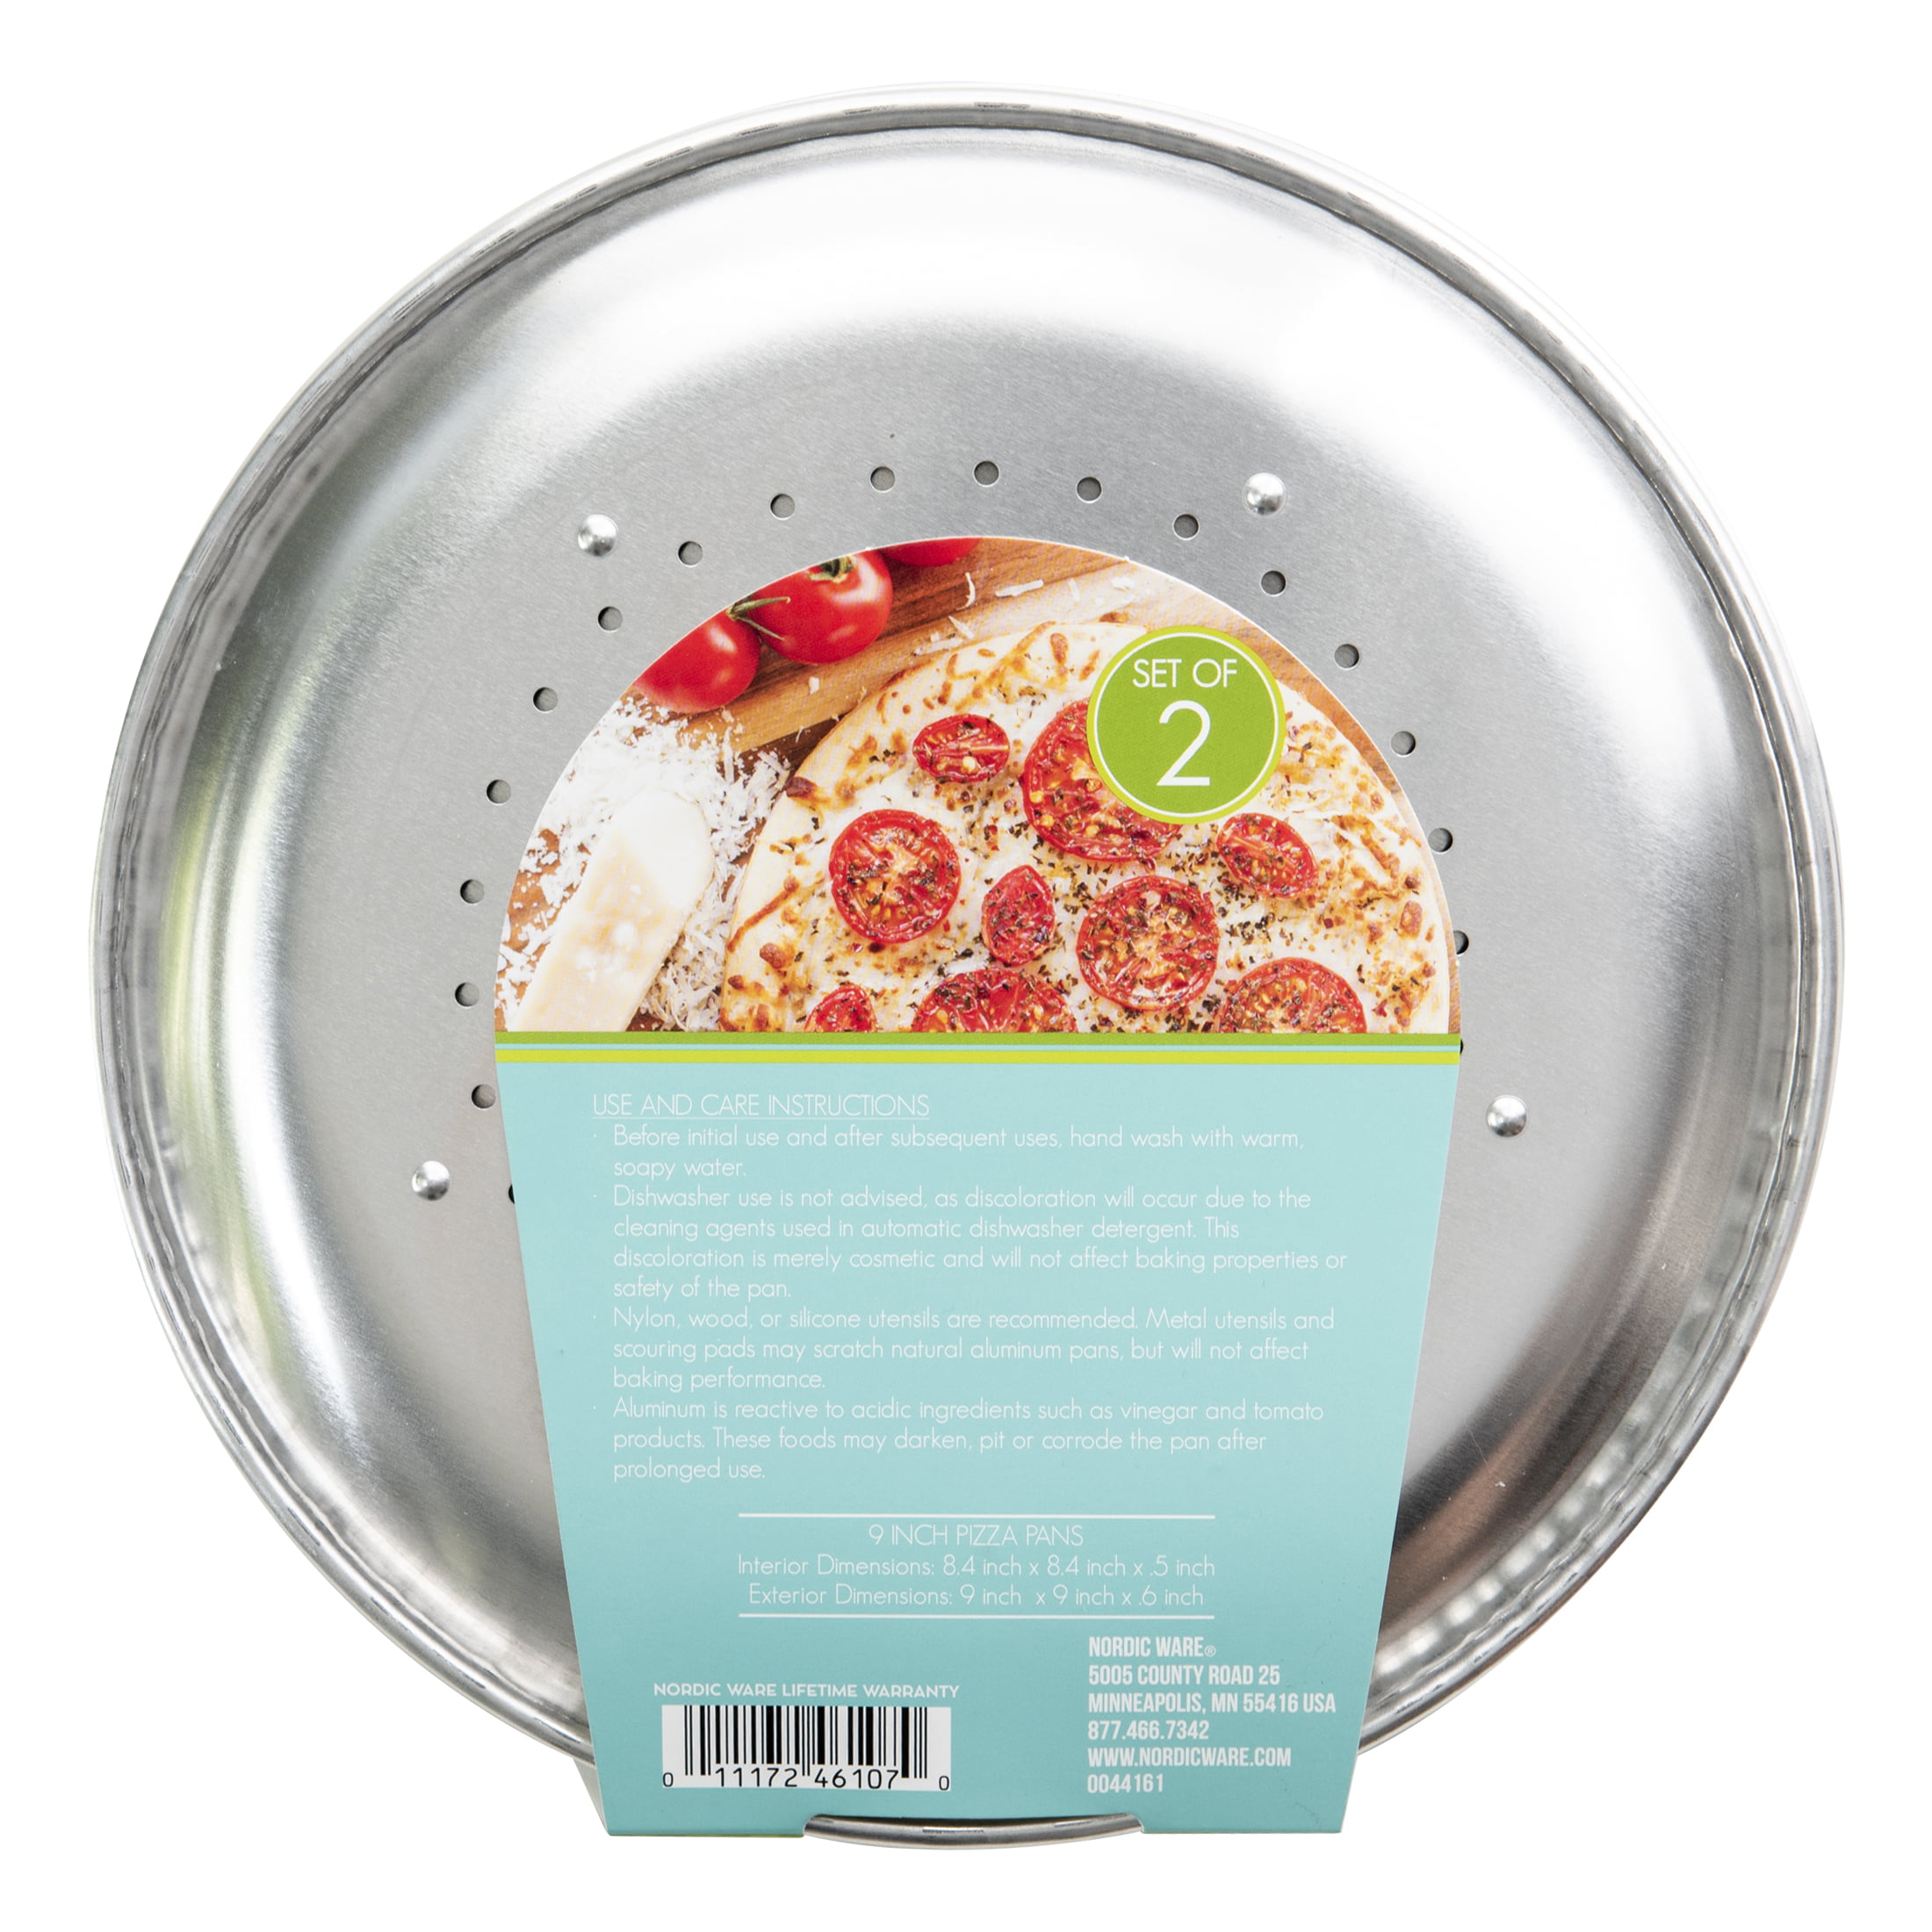 Sheet Pan Pesto Pizza - Nordic Ware